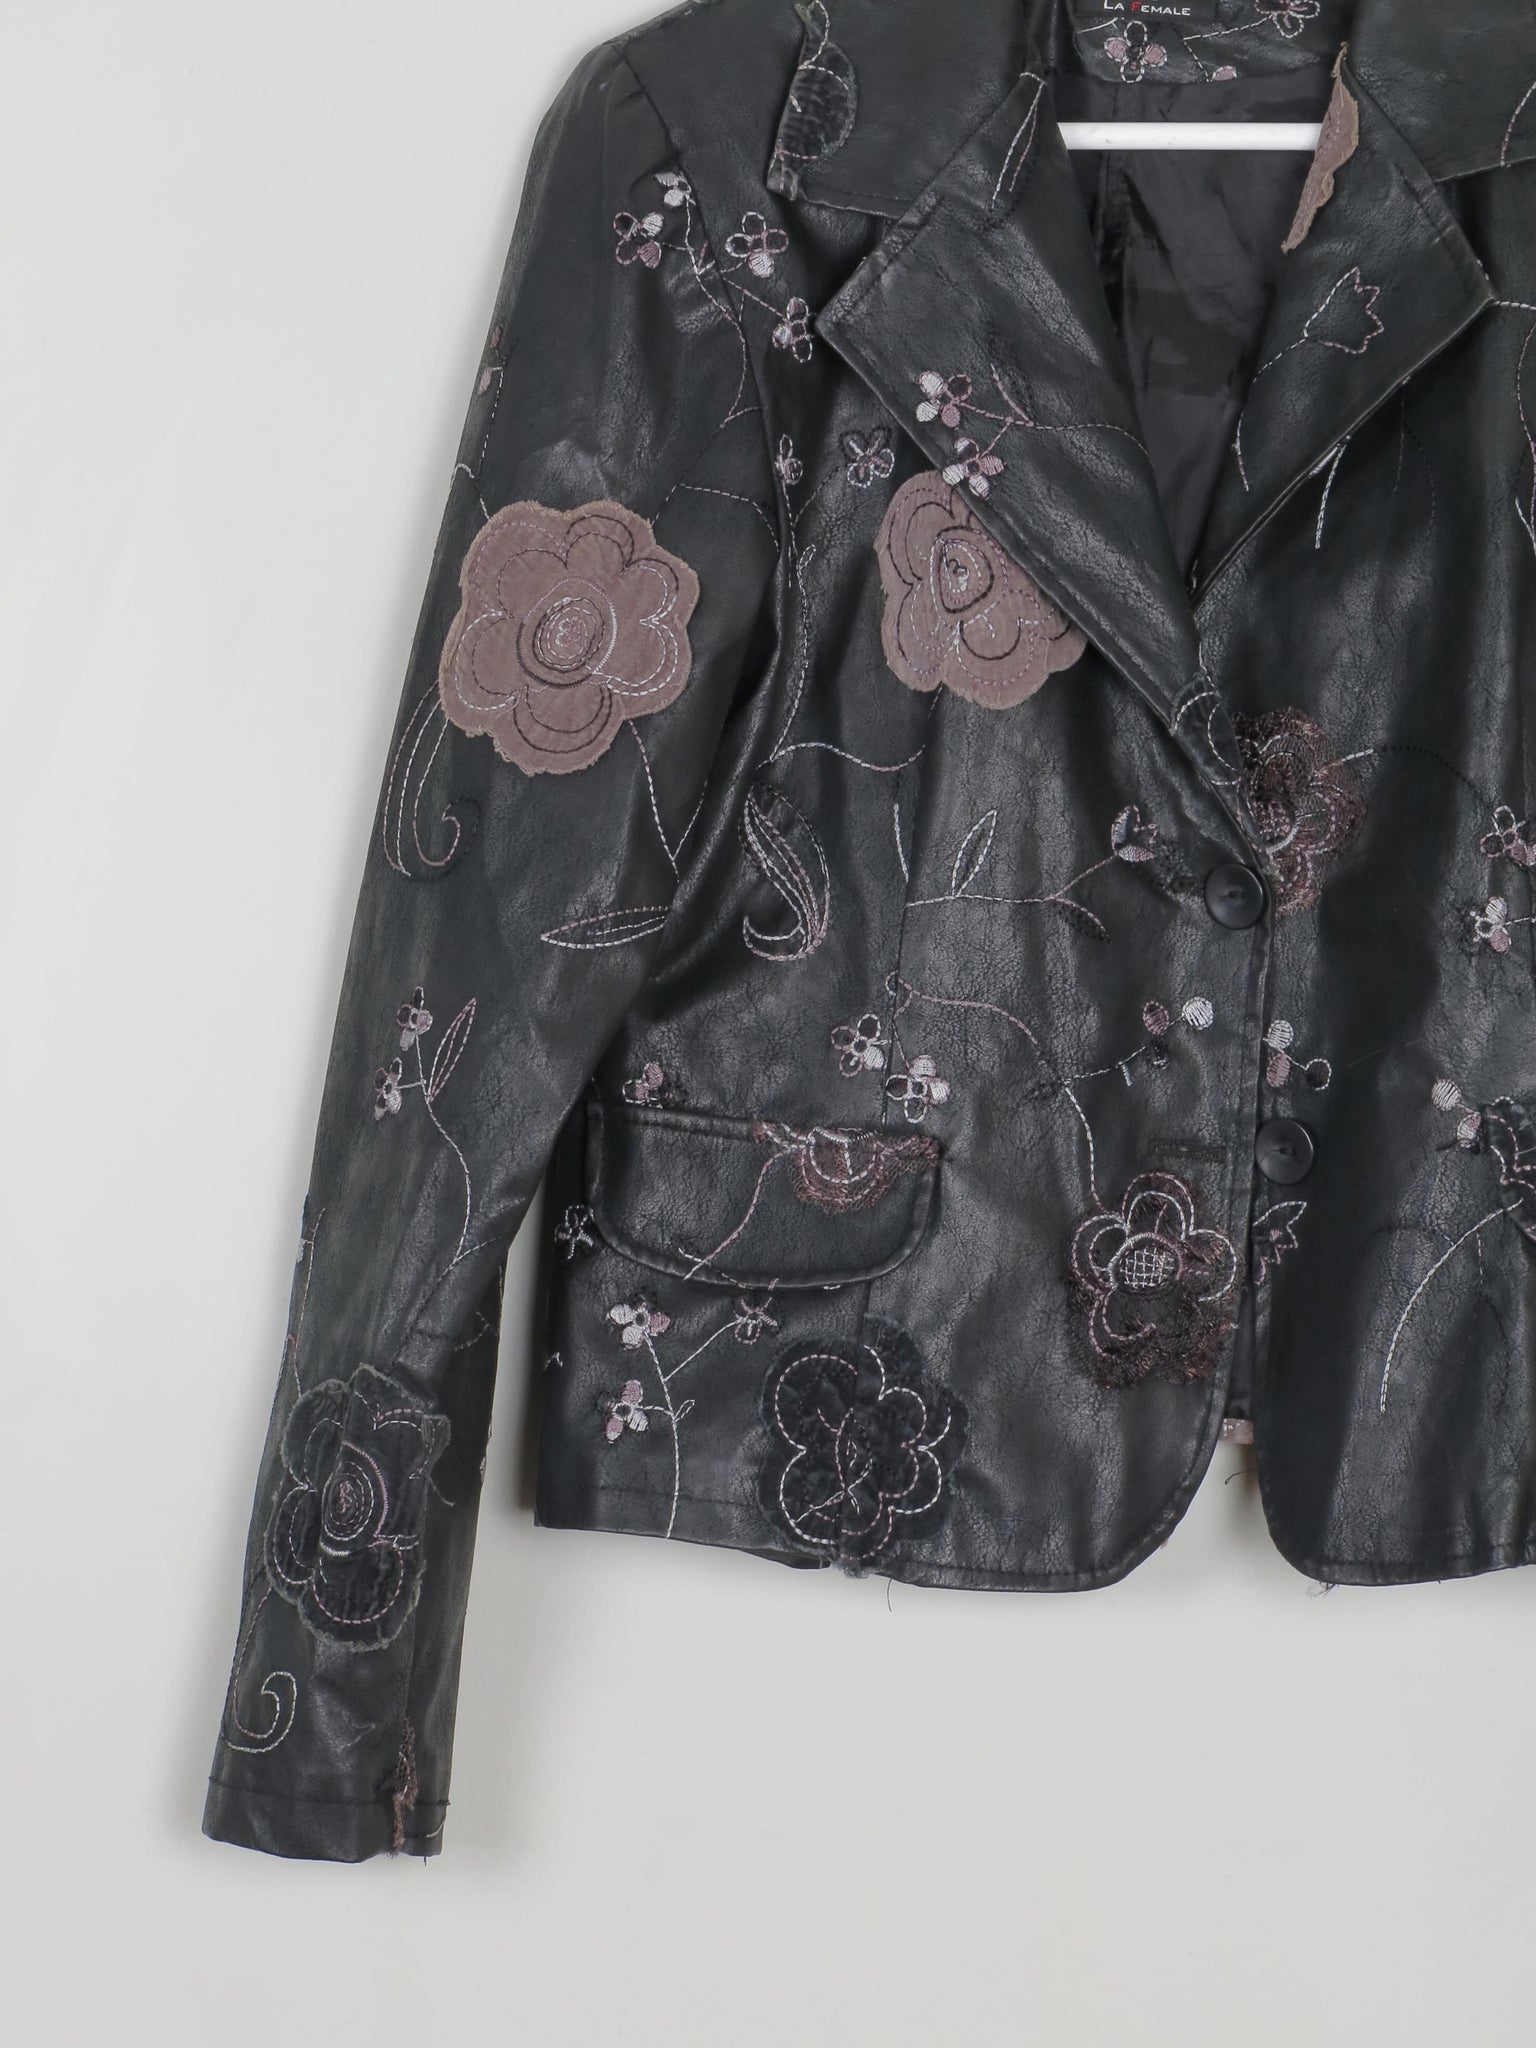 Women’s Vintage Black PU Leather Jacket M - The Harlequin